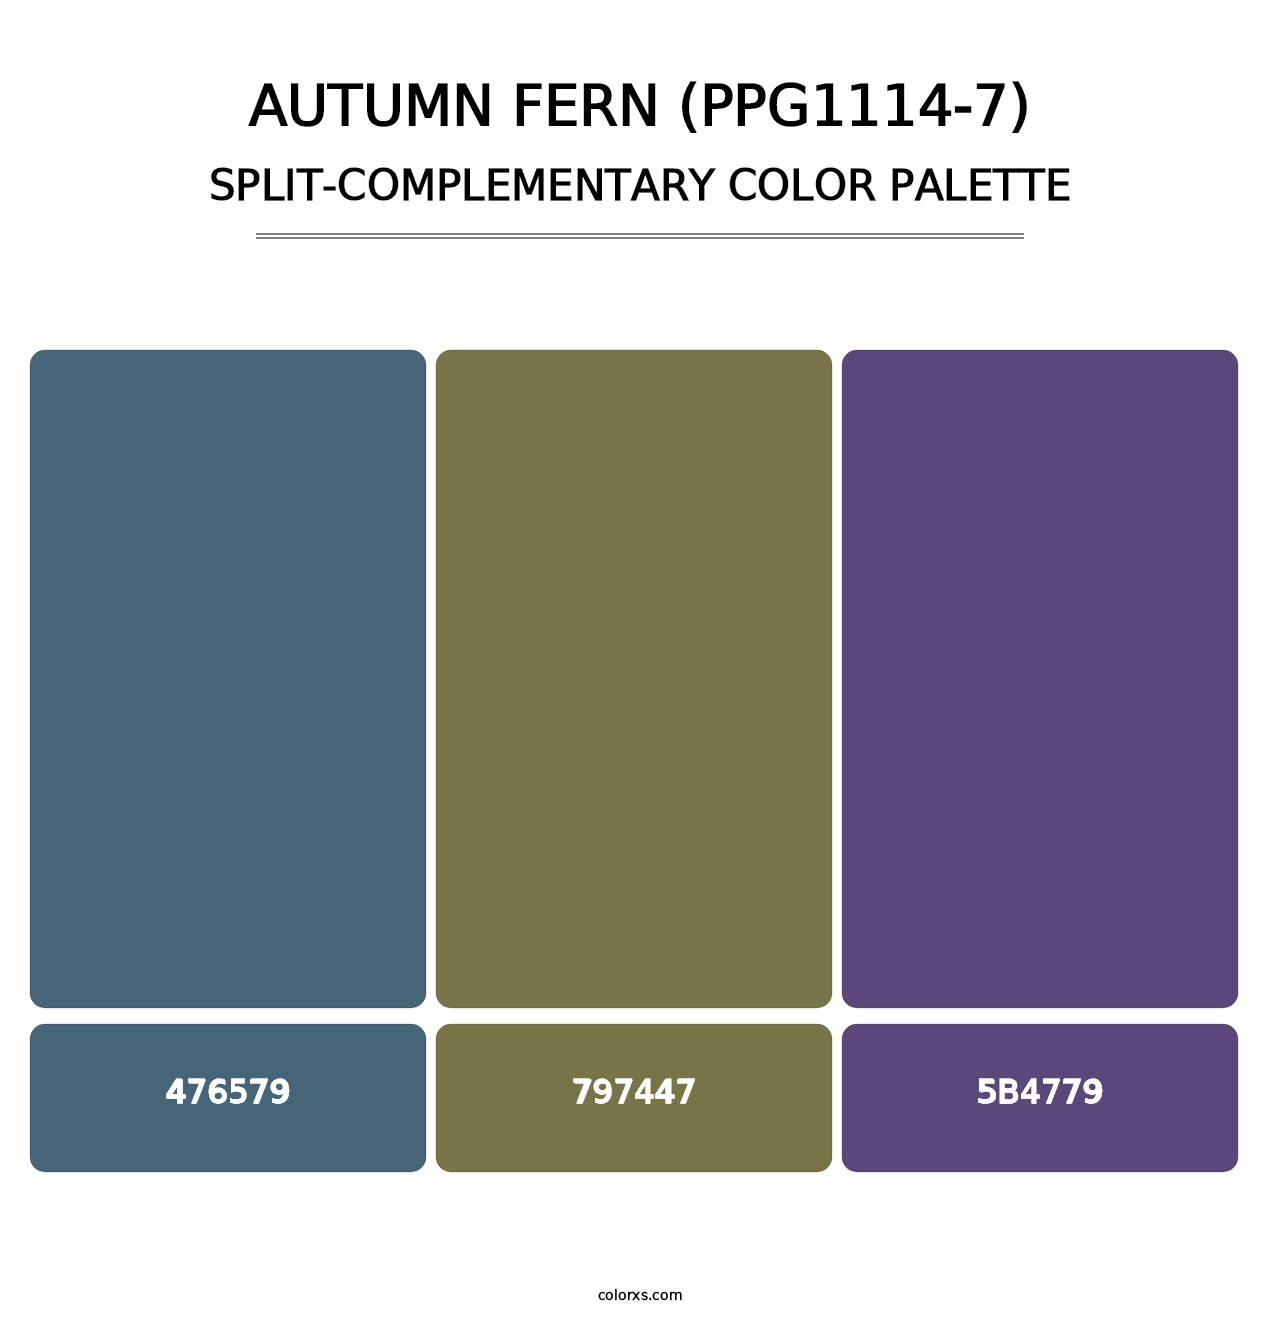 Autumn Fern (PPG1114-7) - Split-Complementary Color Palette